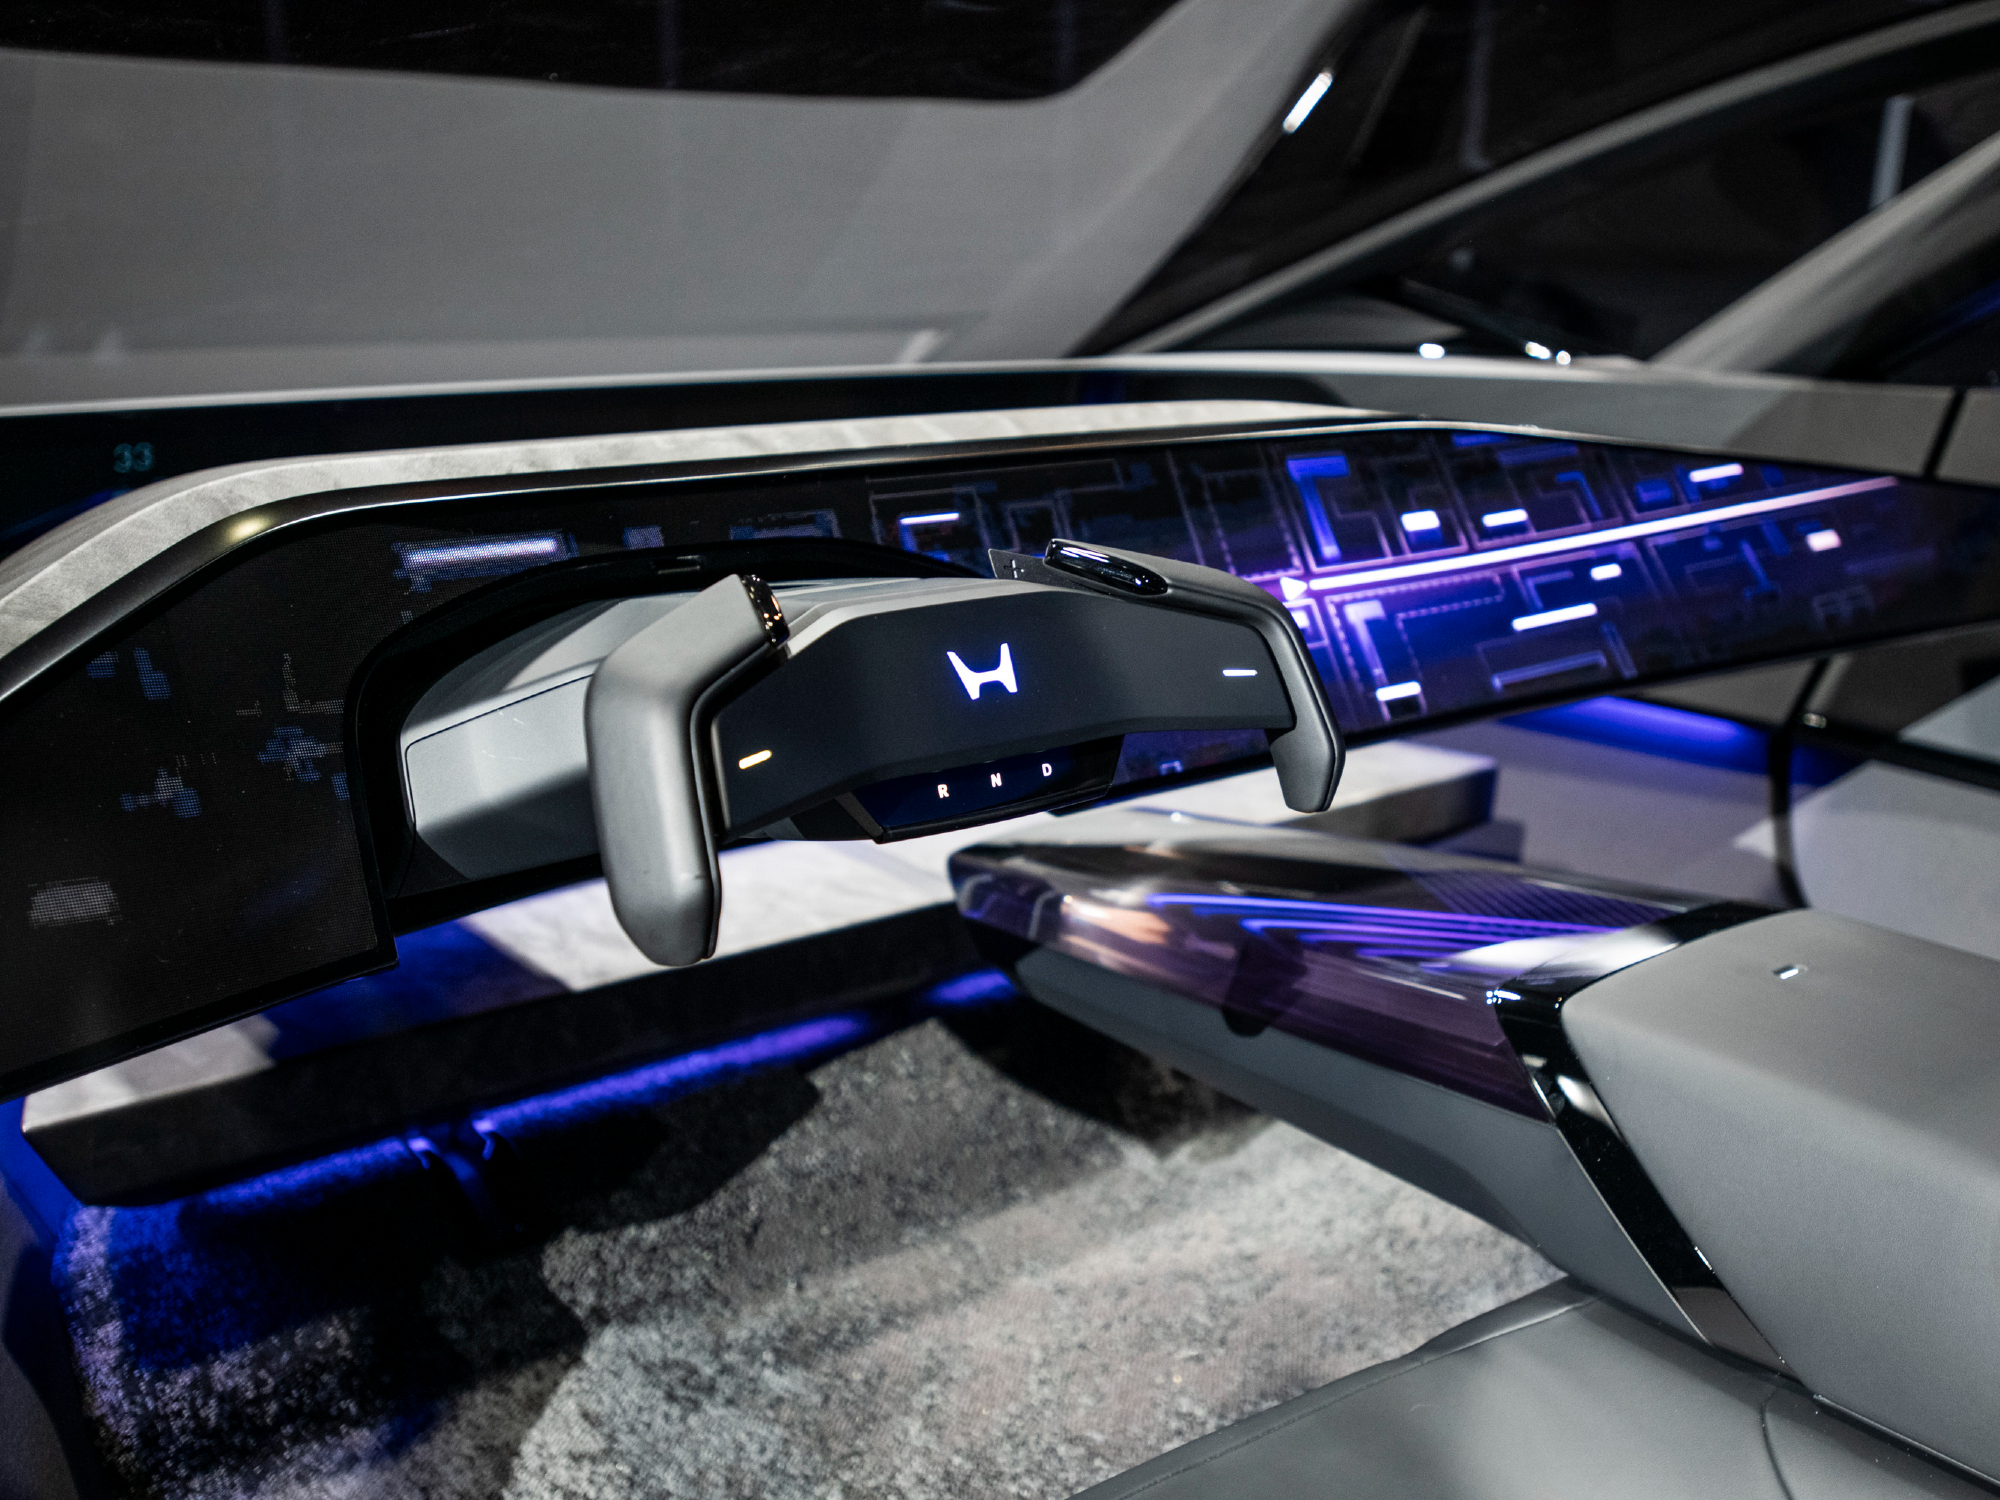 Honda 0 Saloon concept EV interior drivers seat view.